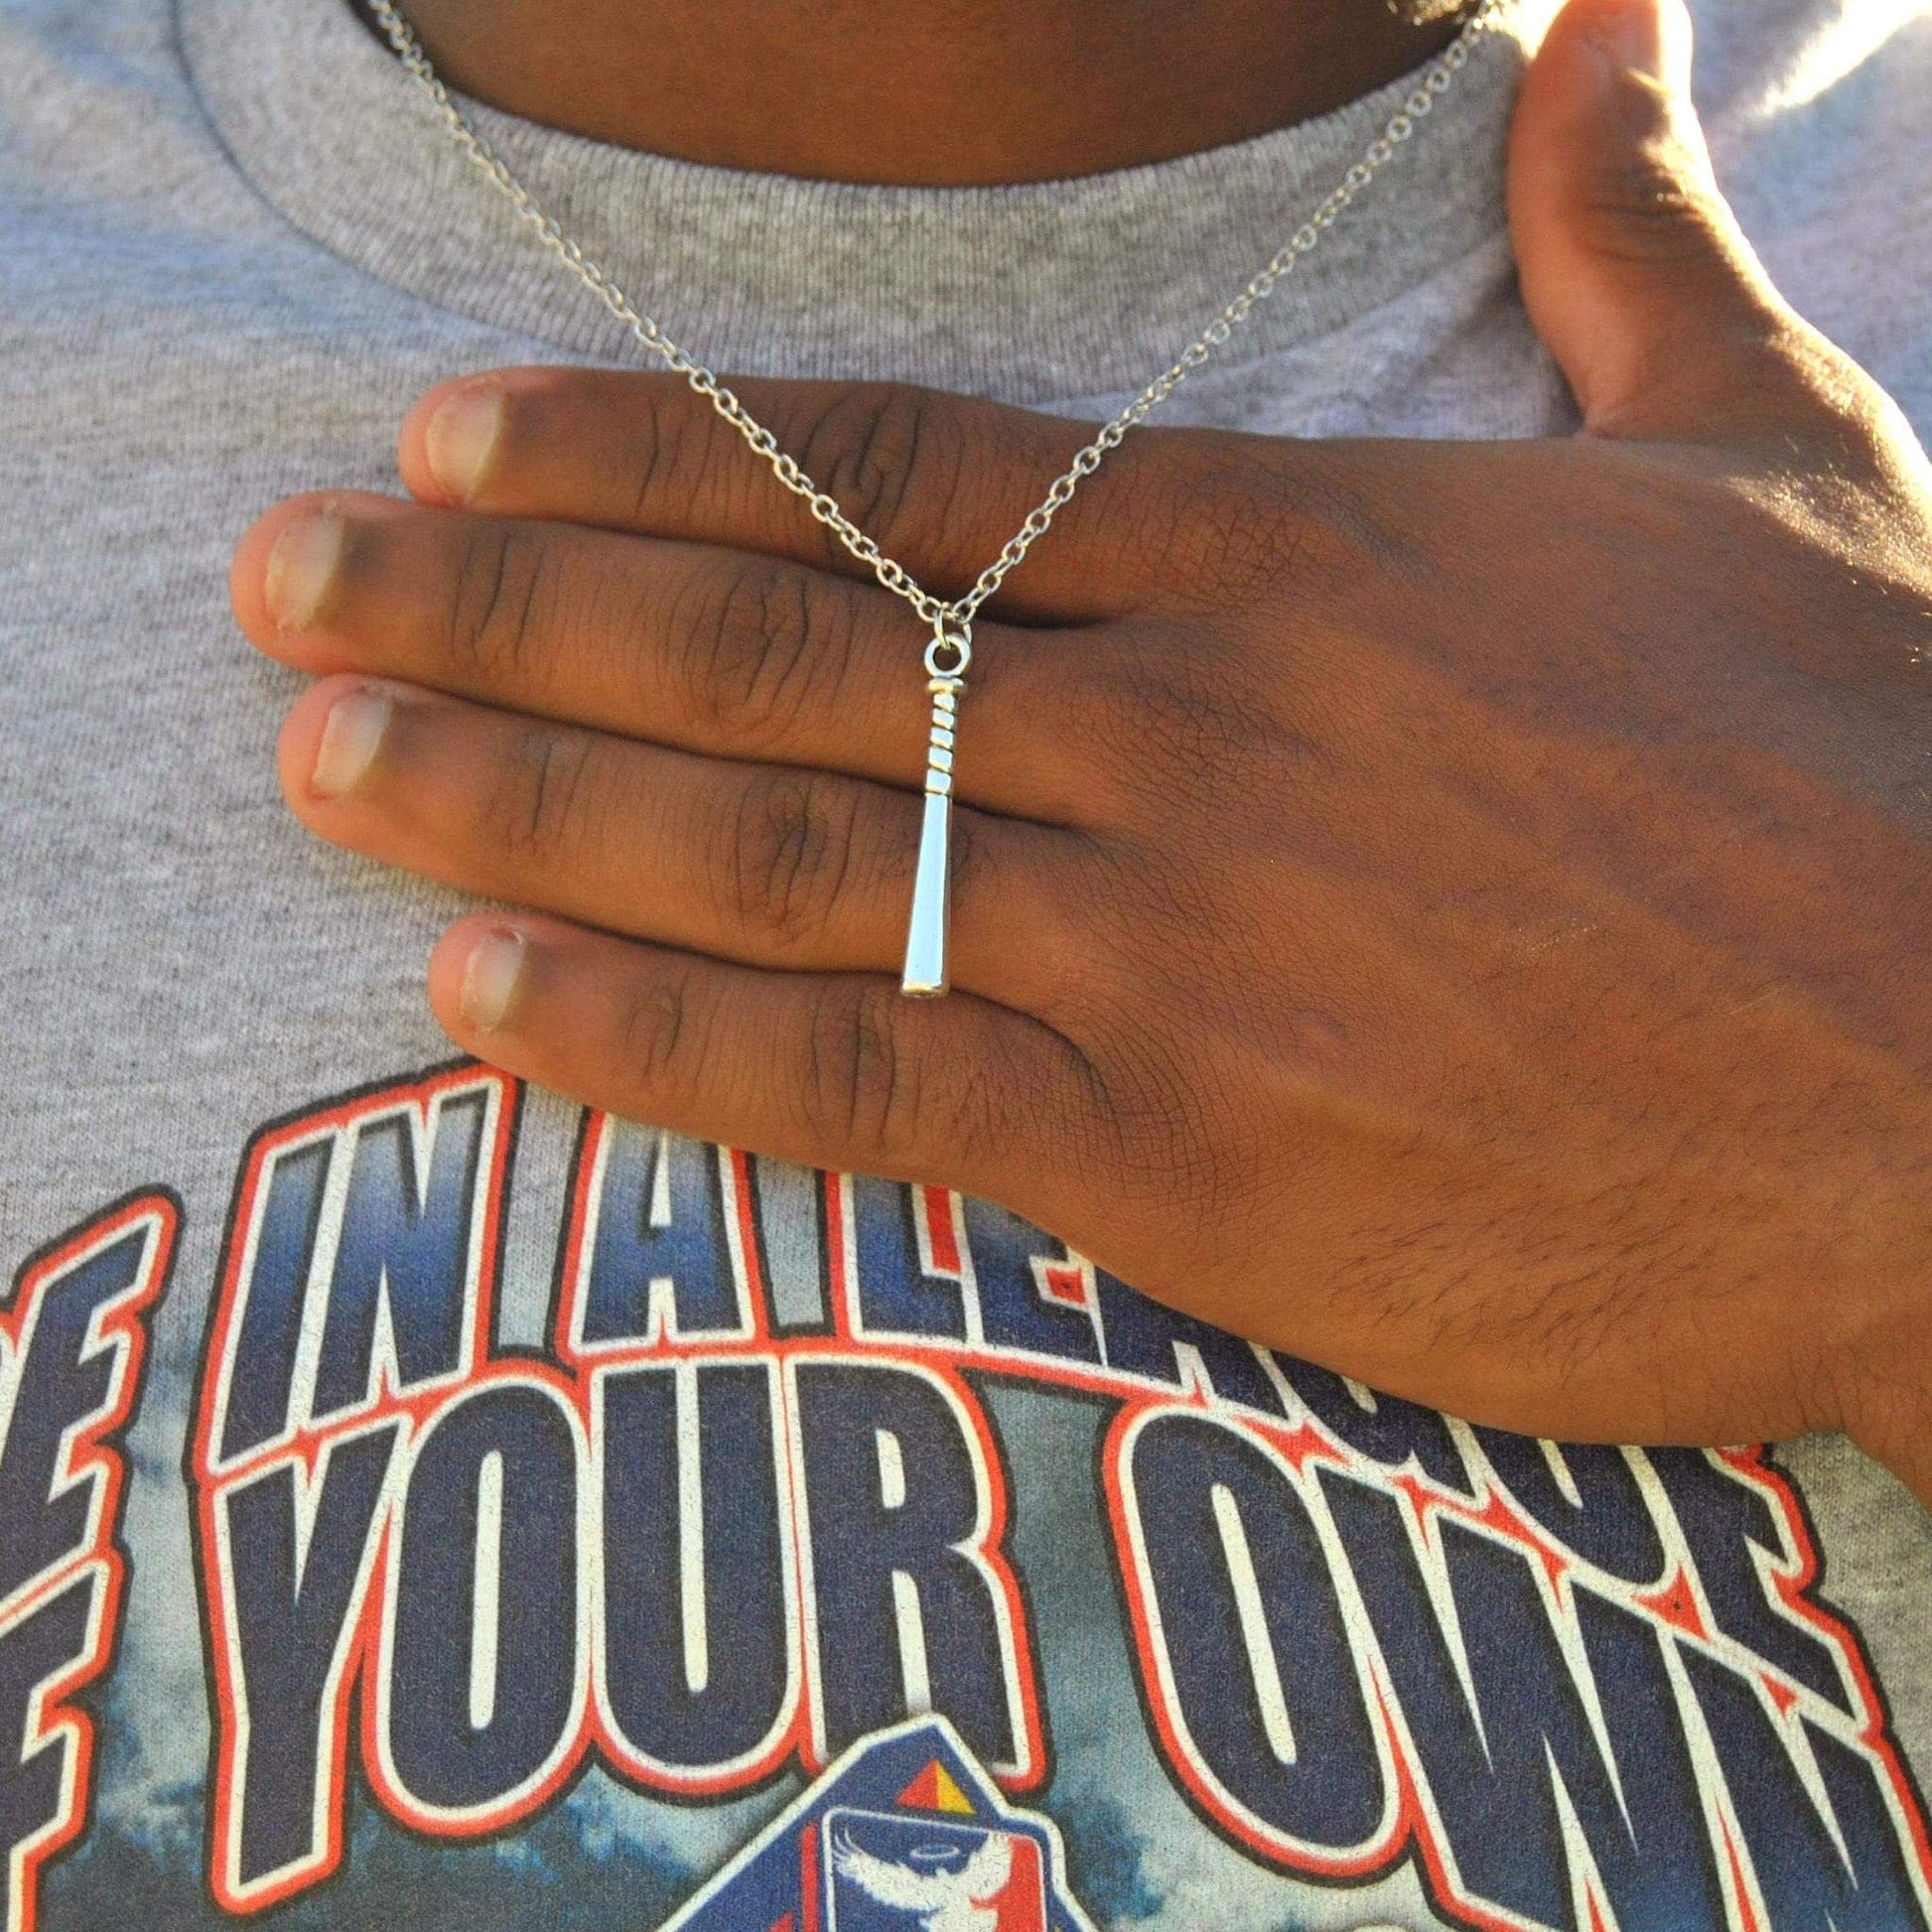 Baseball Bat Pendant and Chain Necklace - Sportzzheads